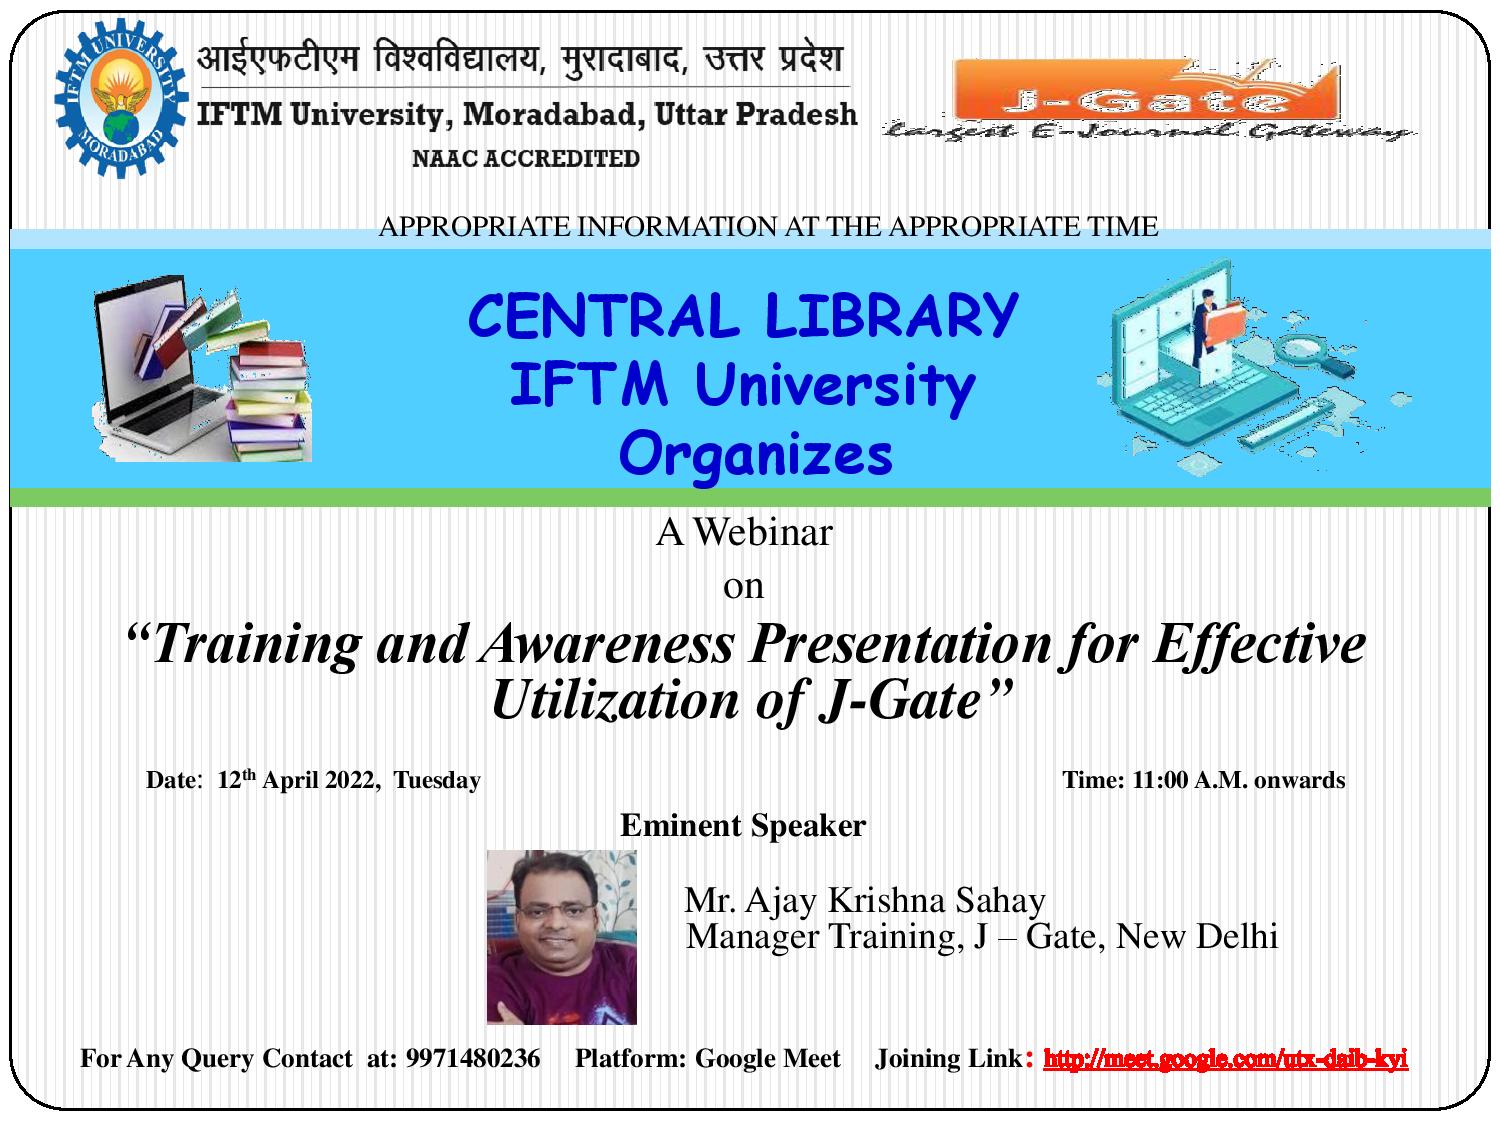 Training and Awareness Presentation for Effective Utilization of J-Gate